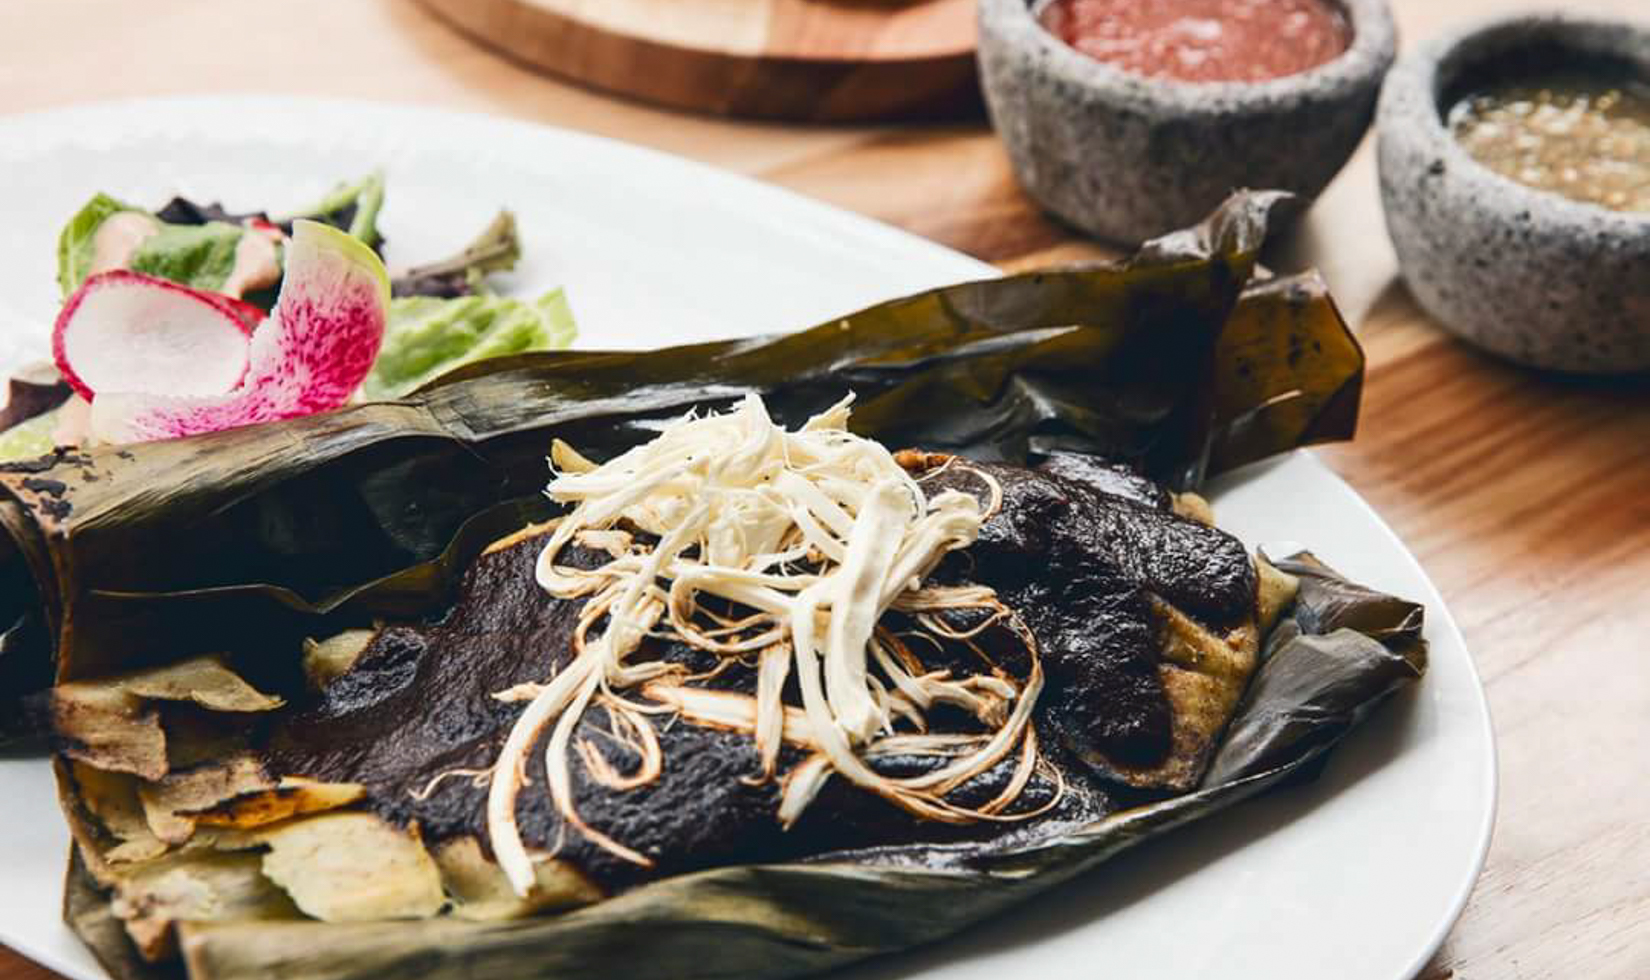 Agave Mexican Restaurant Healdsburg Mole wild mushroom wrapped in banana leaf